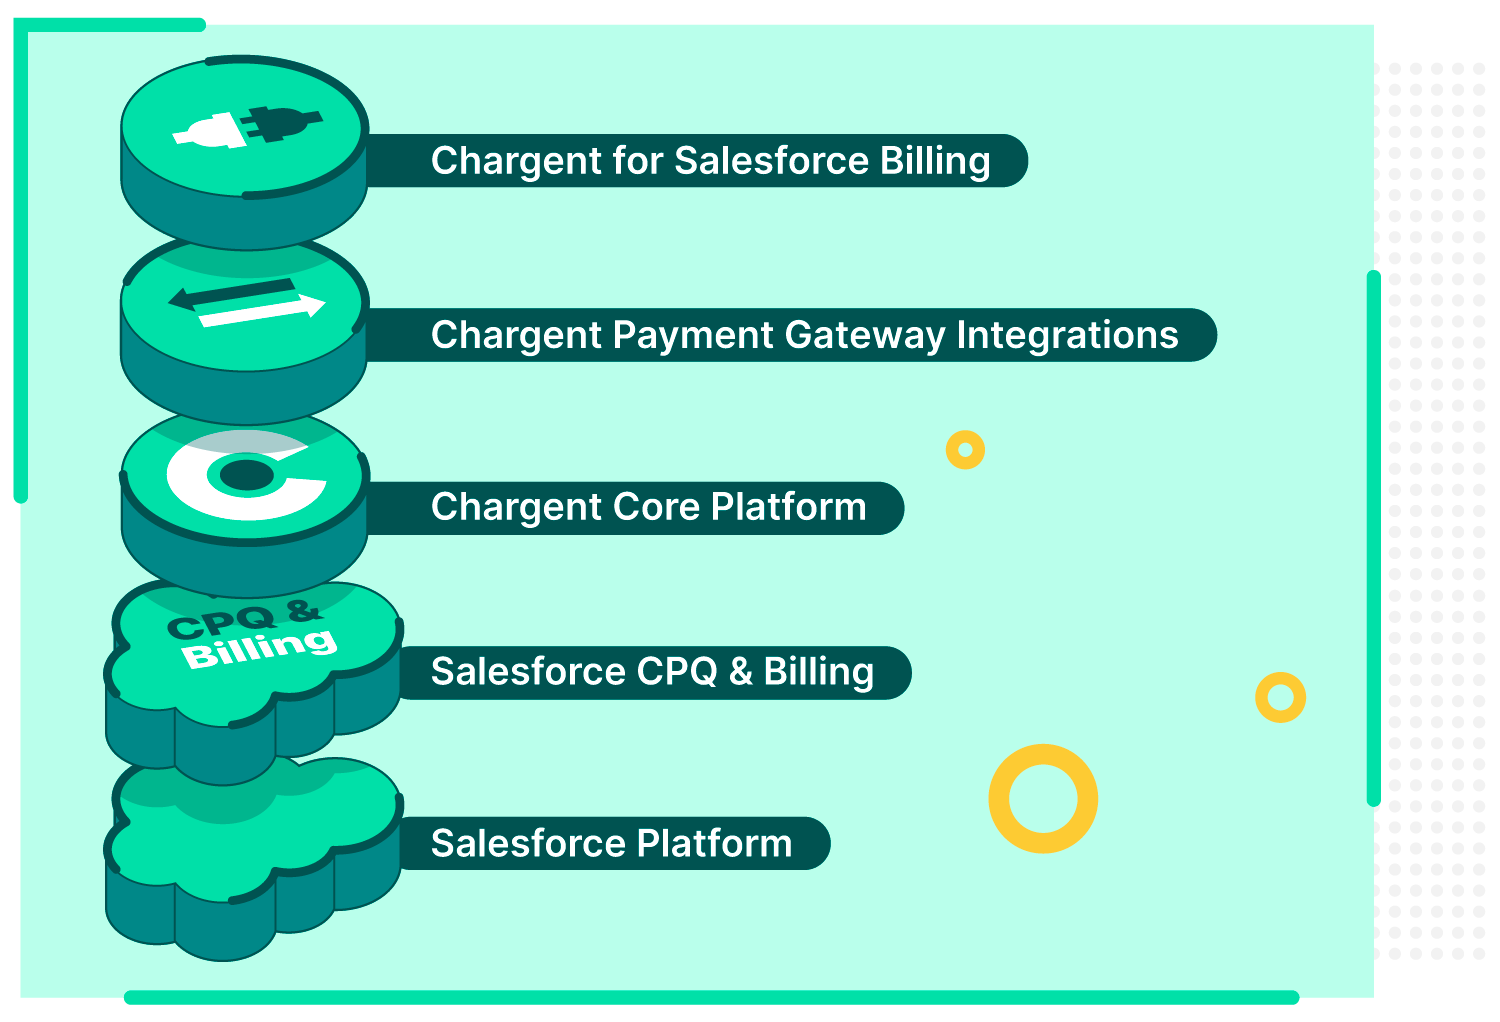 Chargent for Salesforce Billing diagram